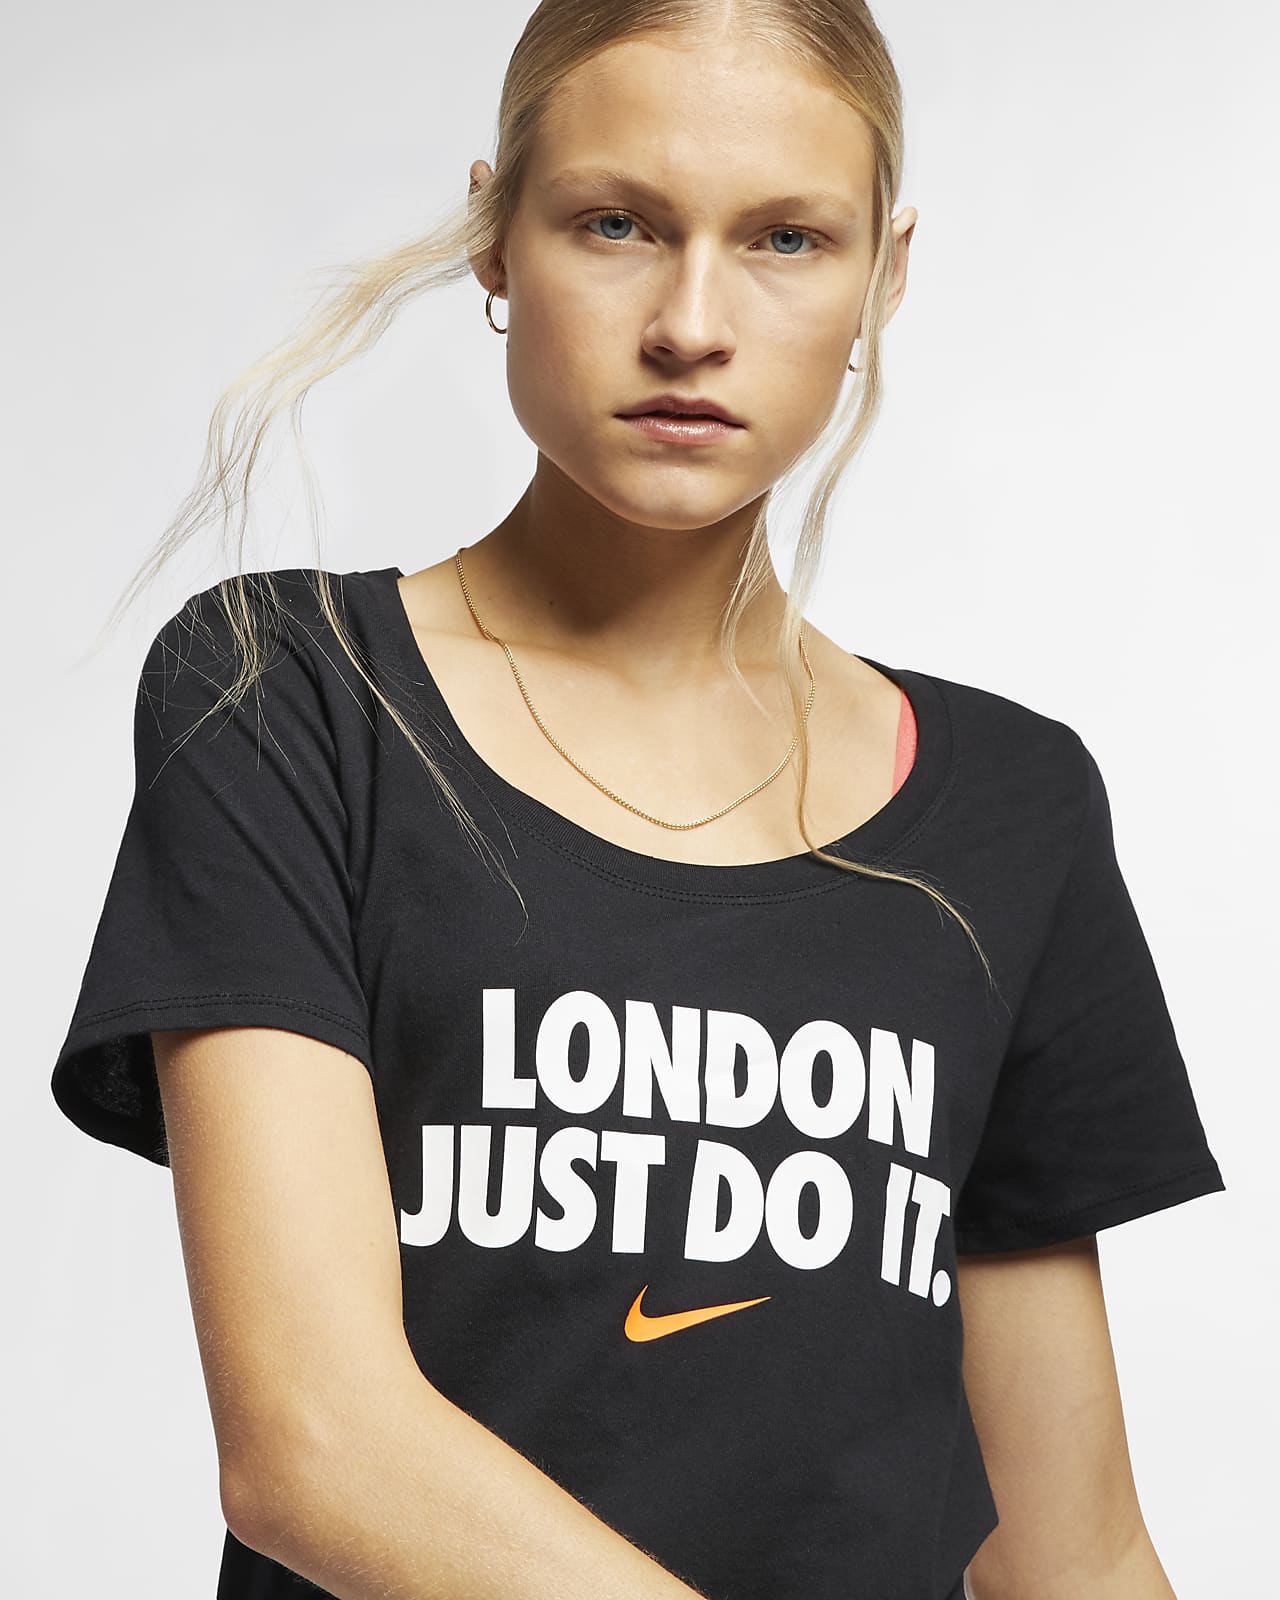 london just do it t shirt